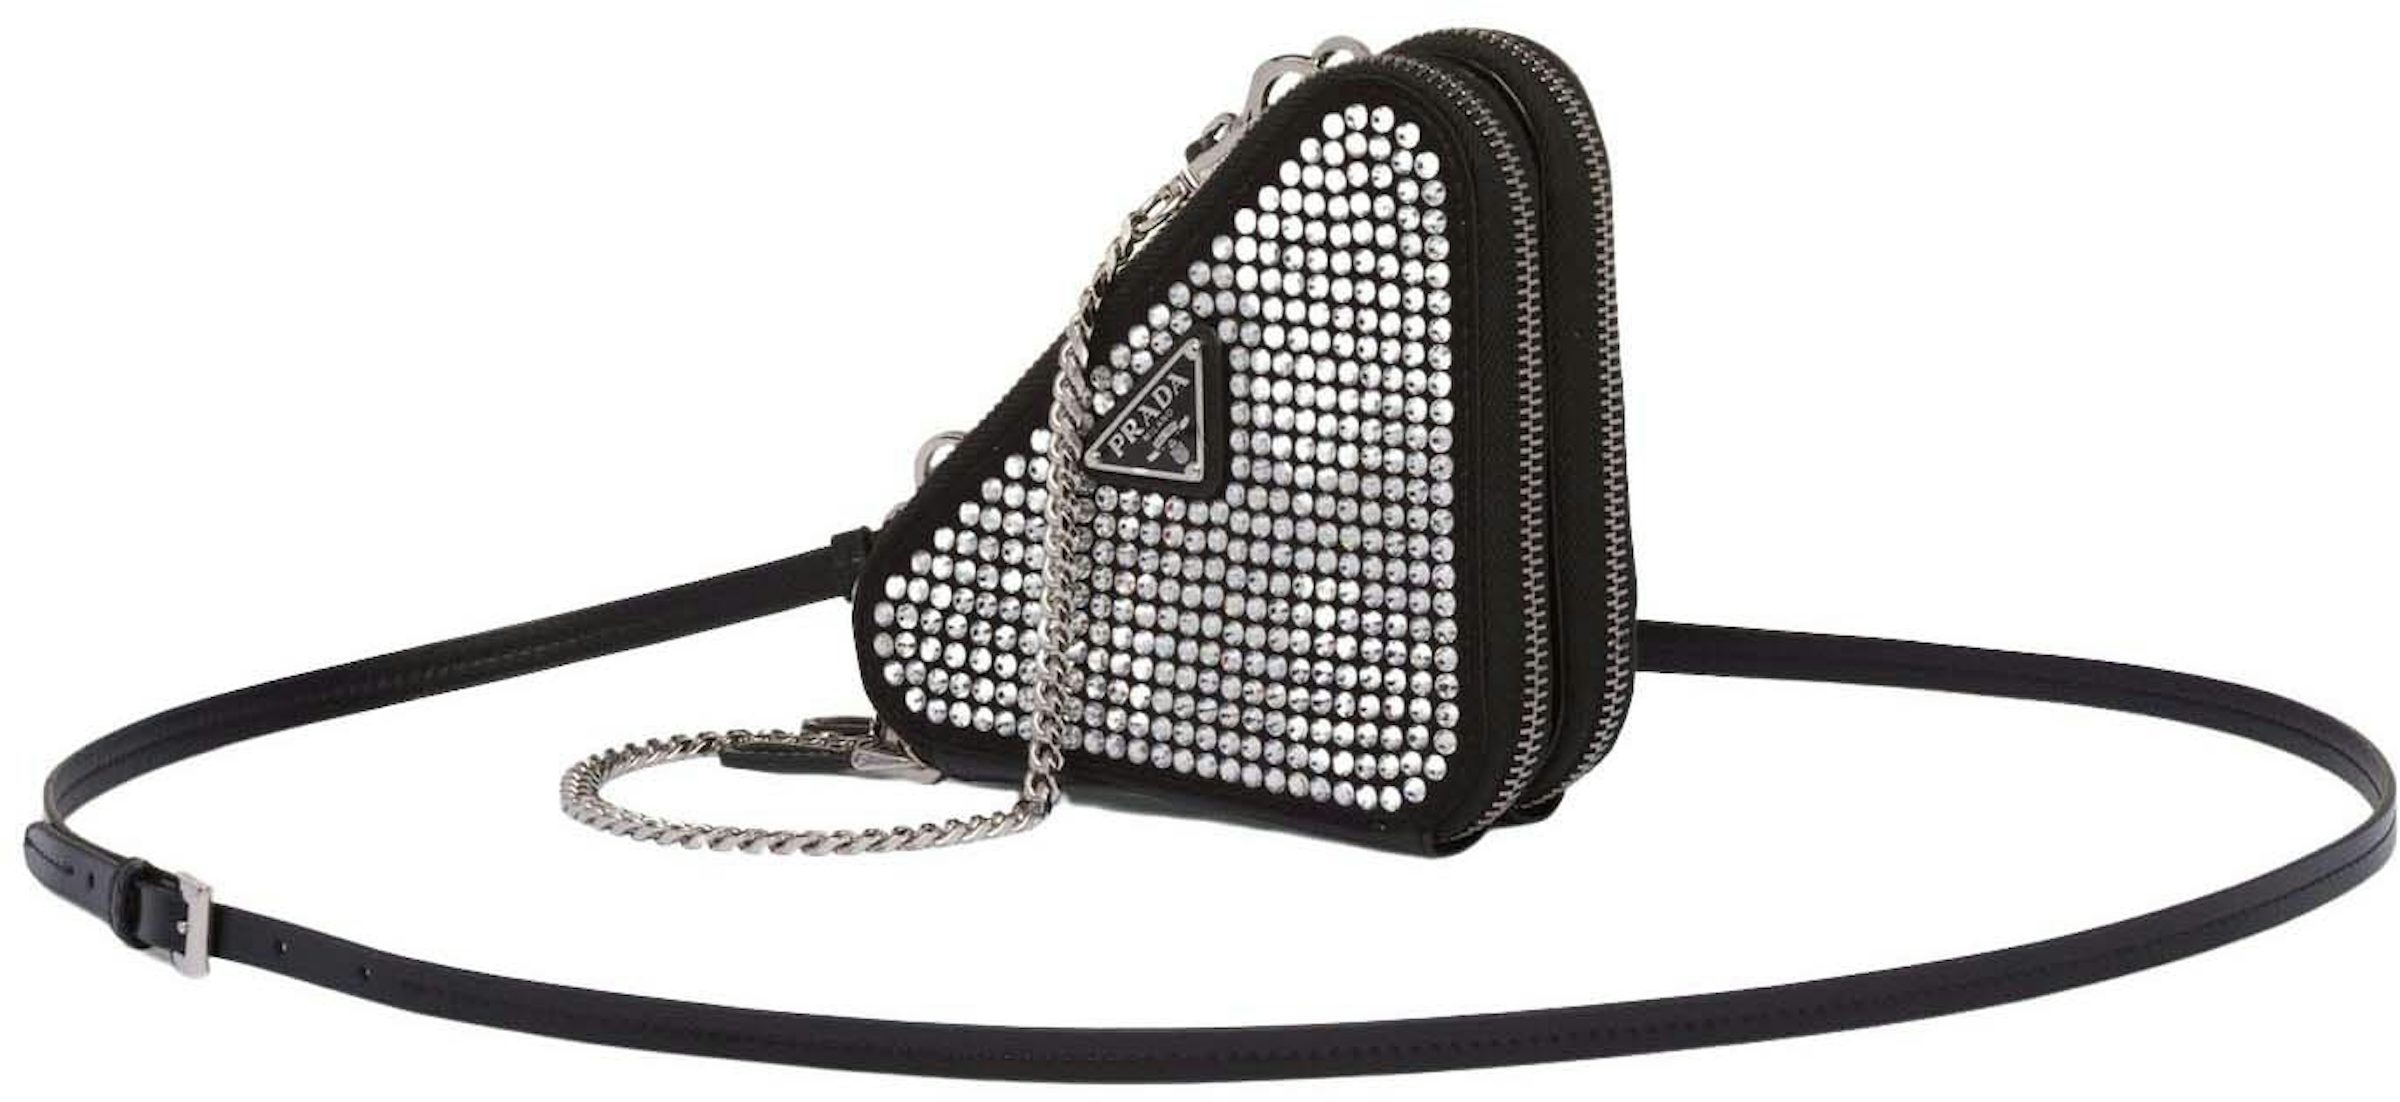 Prada Pattina Studded Trim Crossbody Handbag